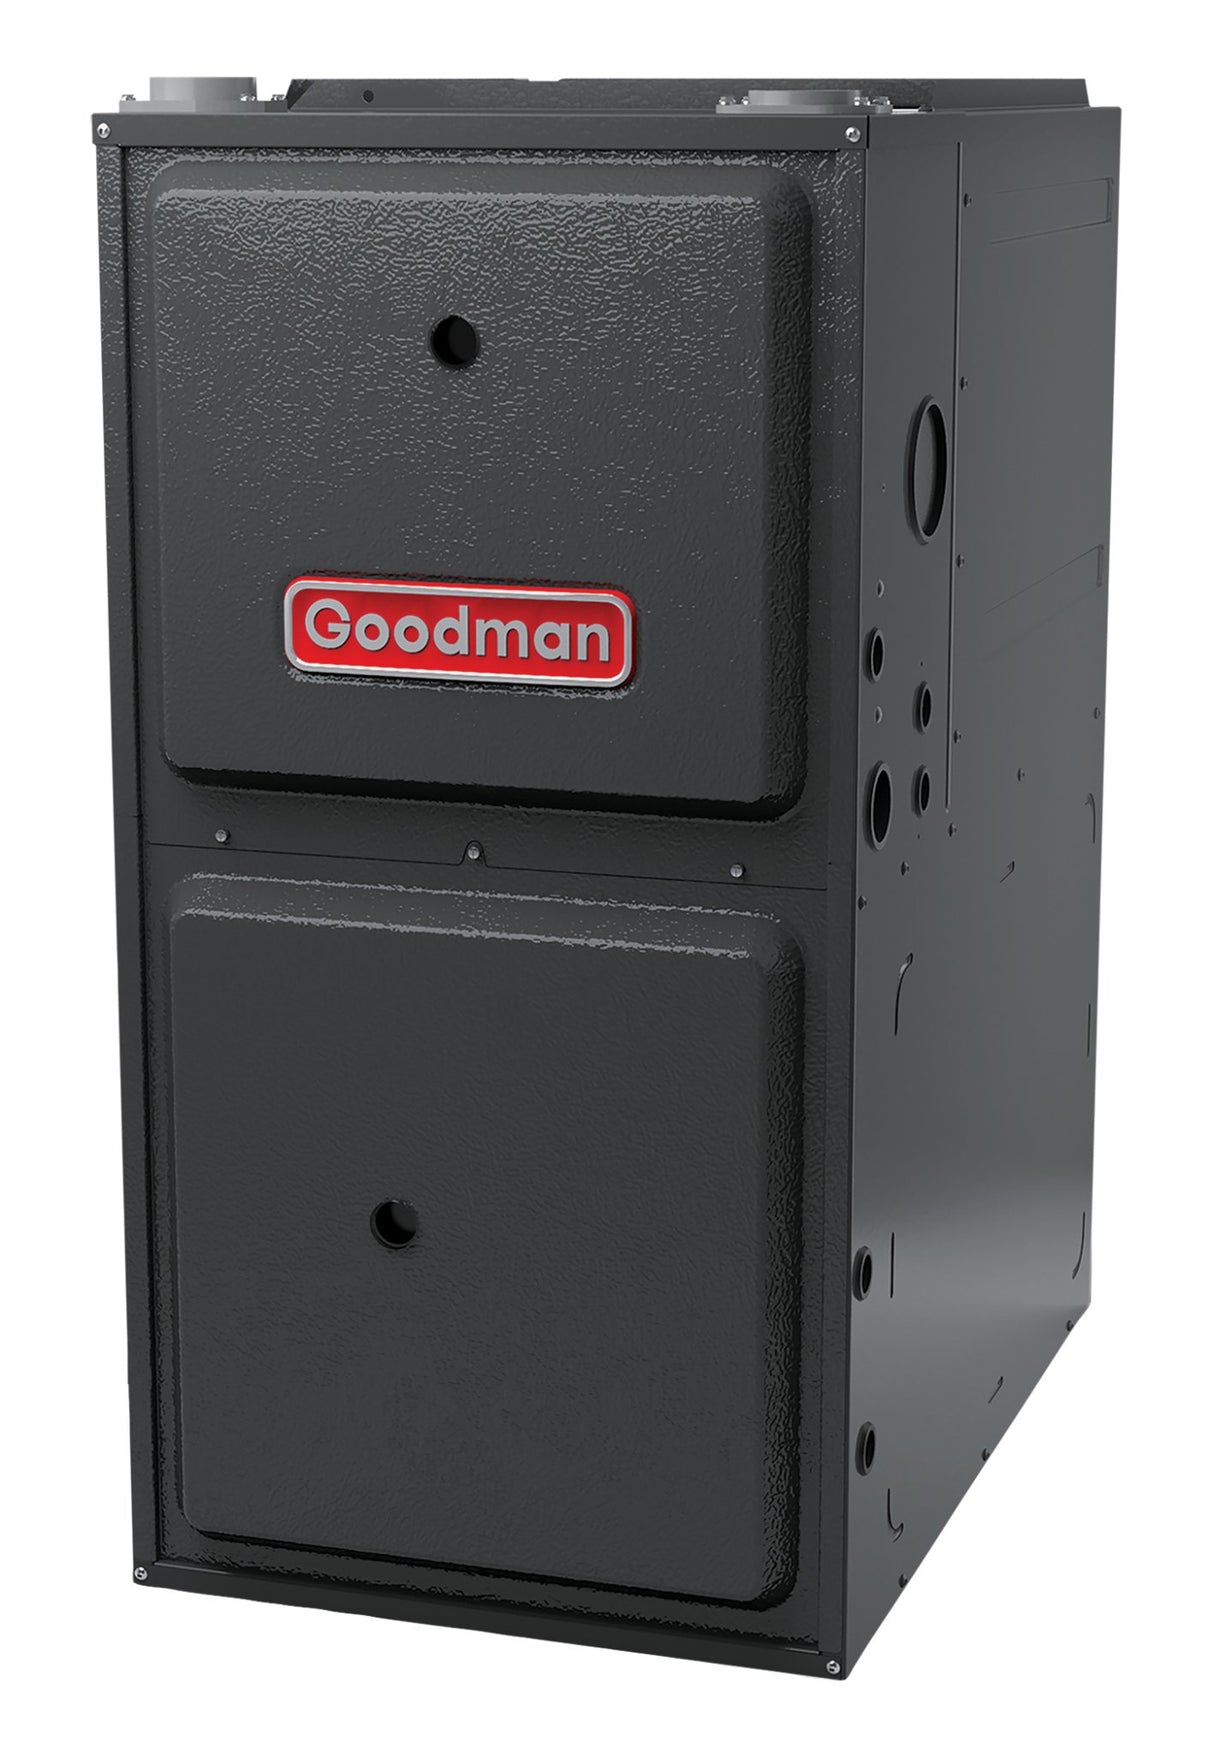 Goodman 2.5 Ton 80% gas 100,000 BTU furnace nine speed ecm two stage GM9C801004CN - AC units for less